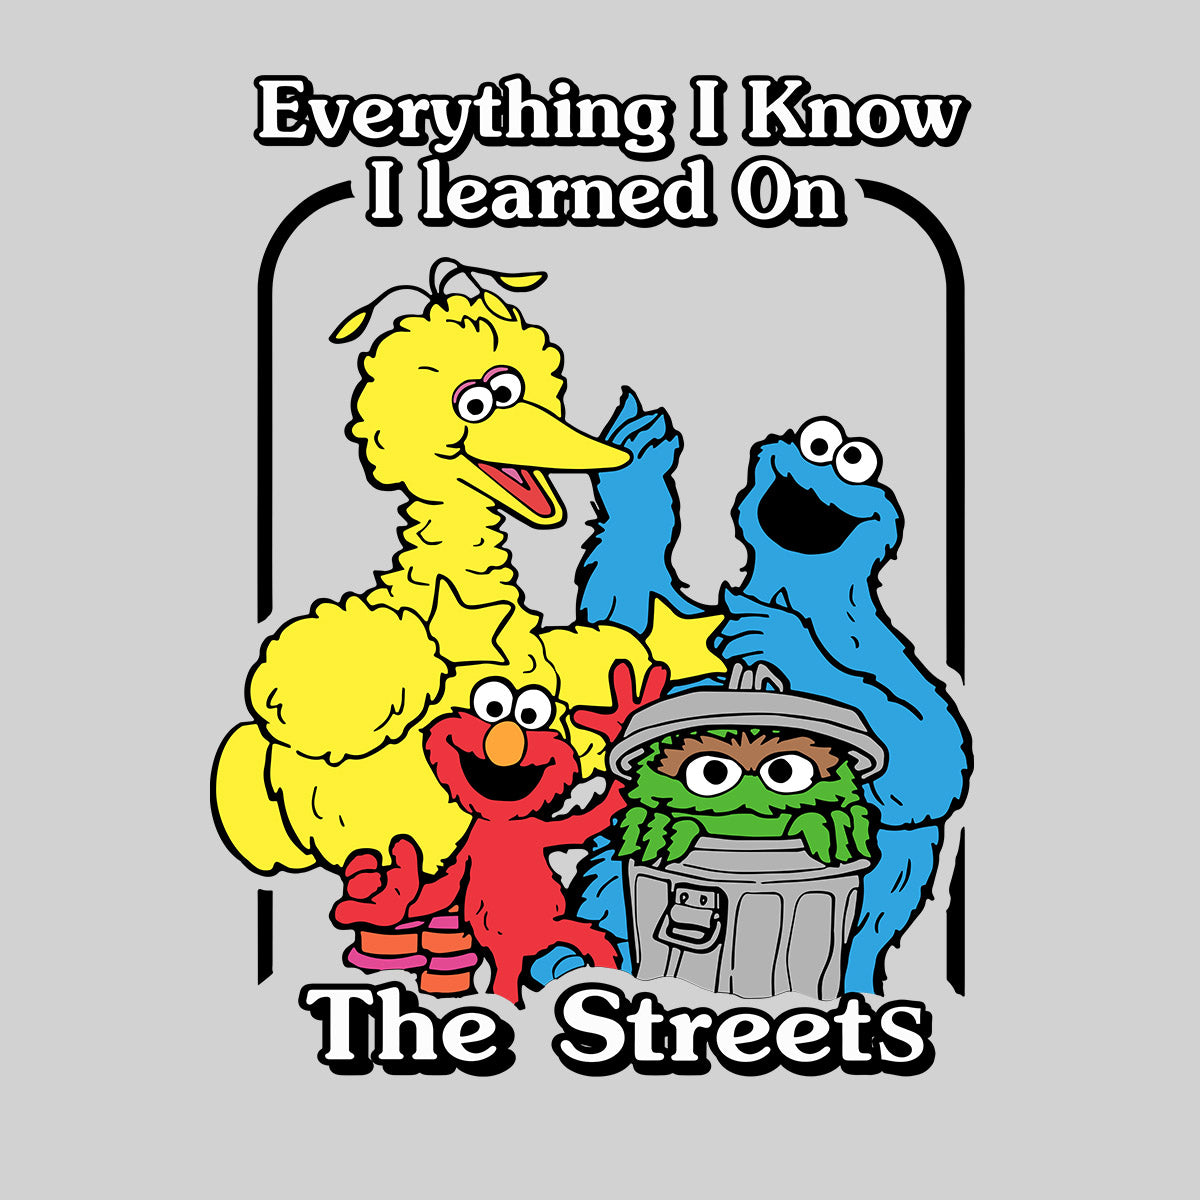 Sesame Street Nostalgia T-shirt 